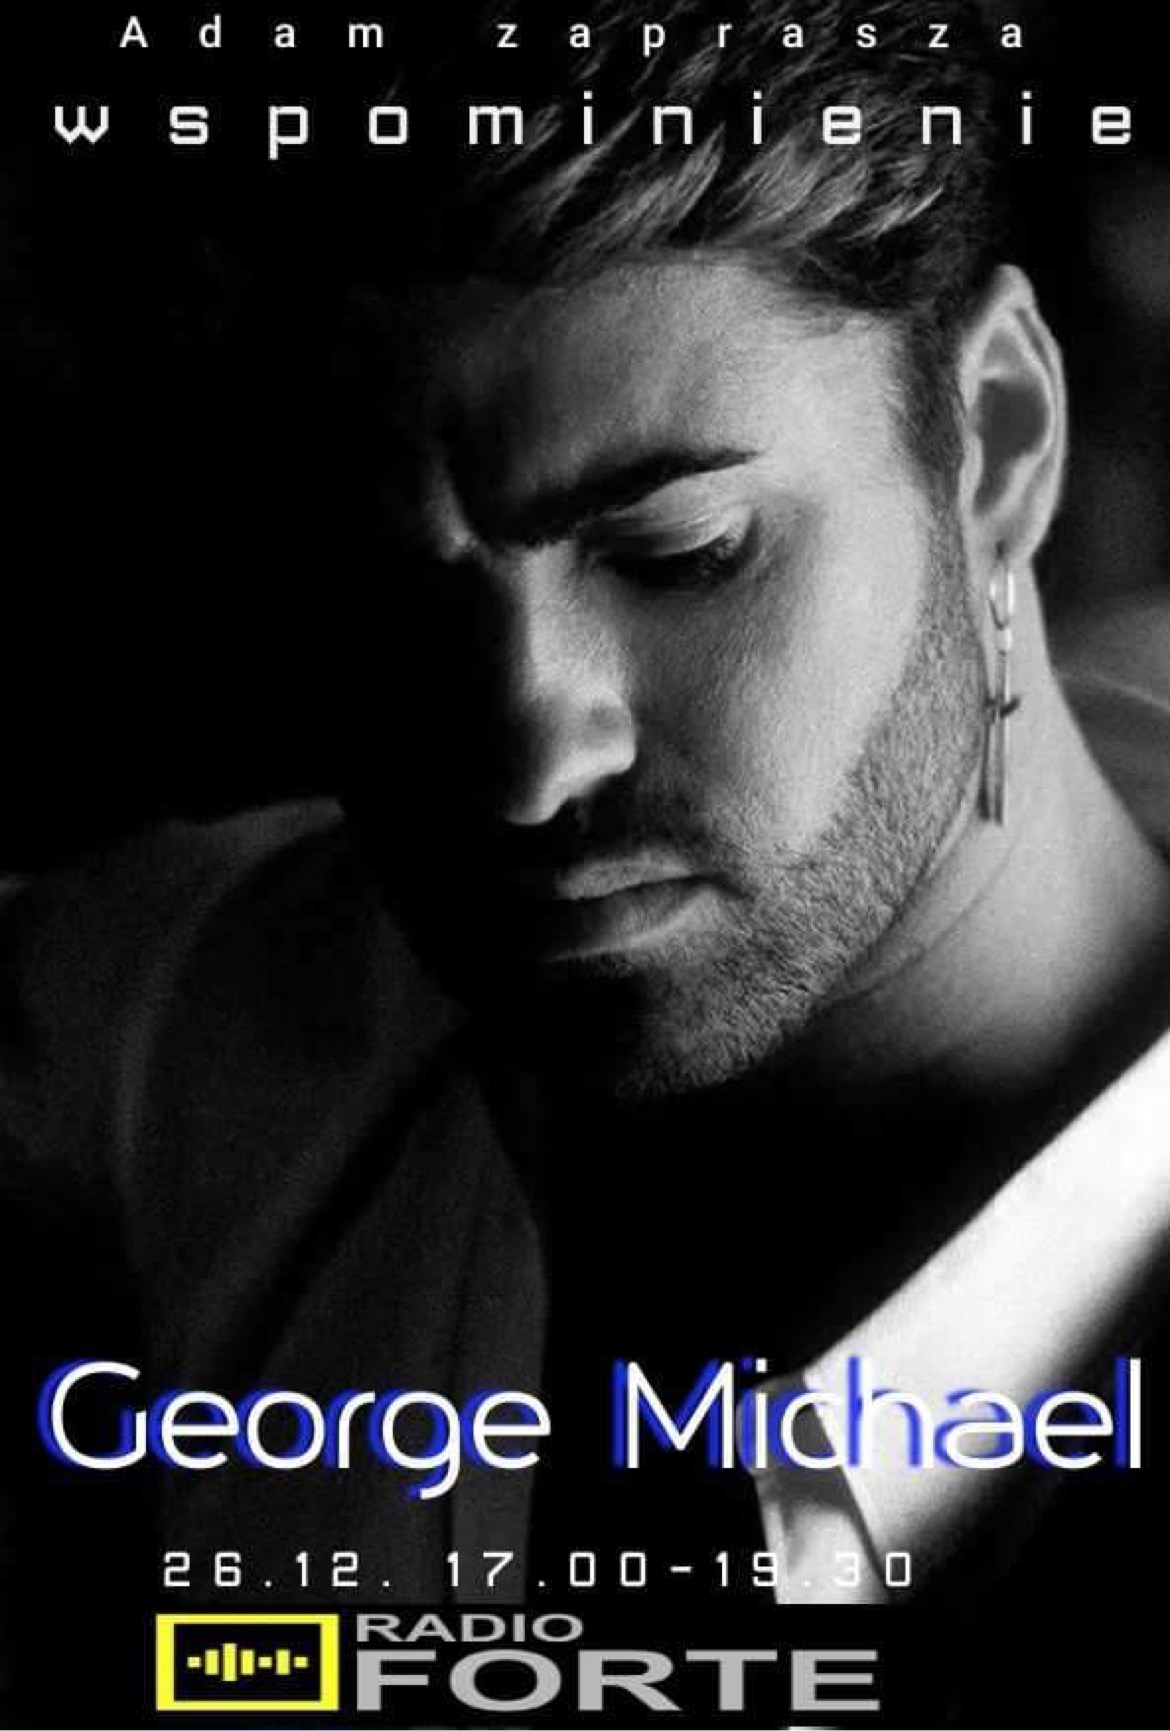 George Michael – wspomnienie